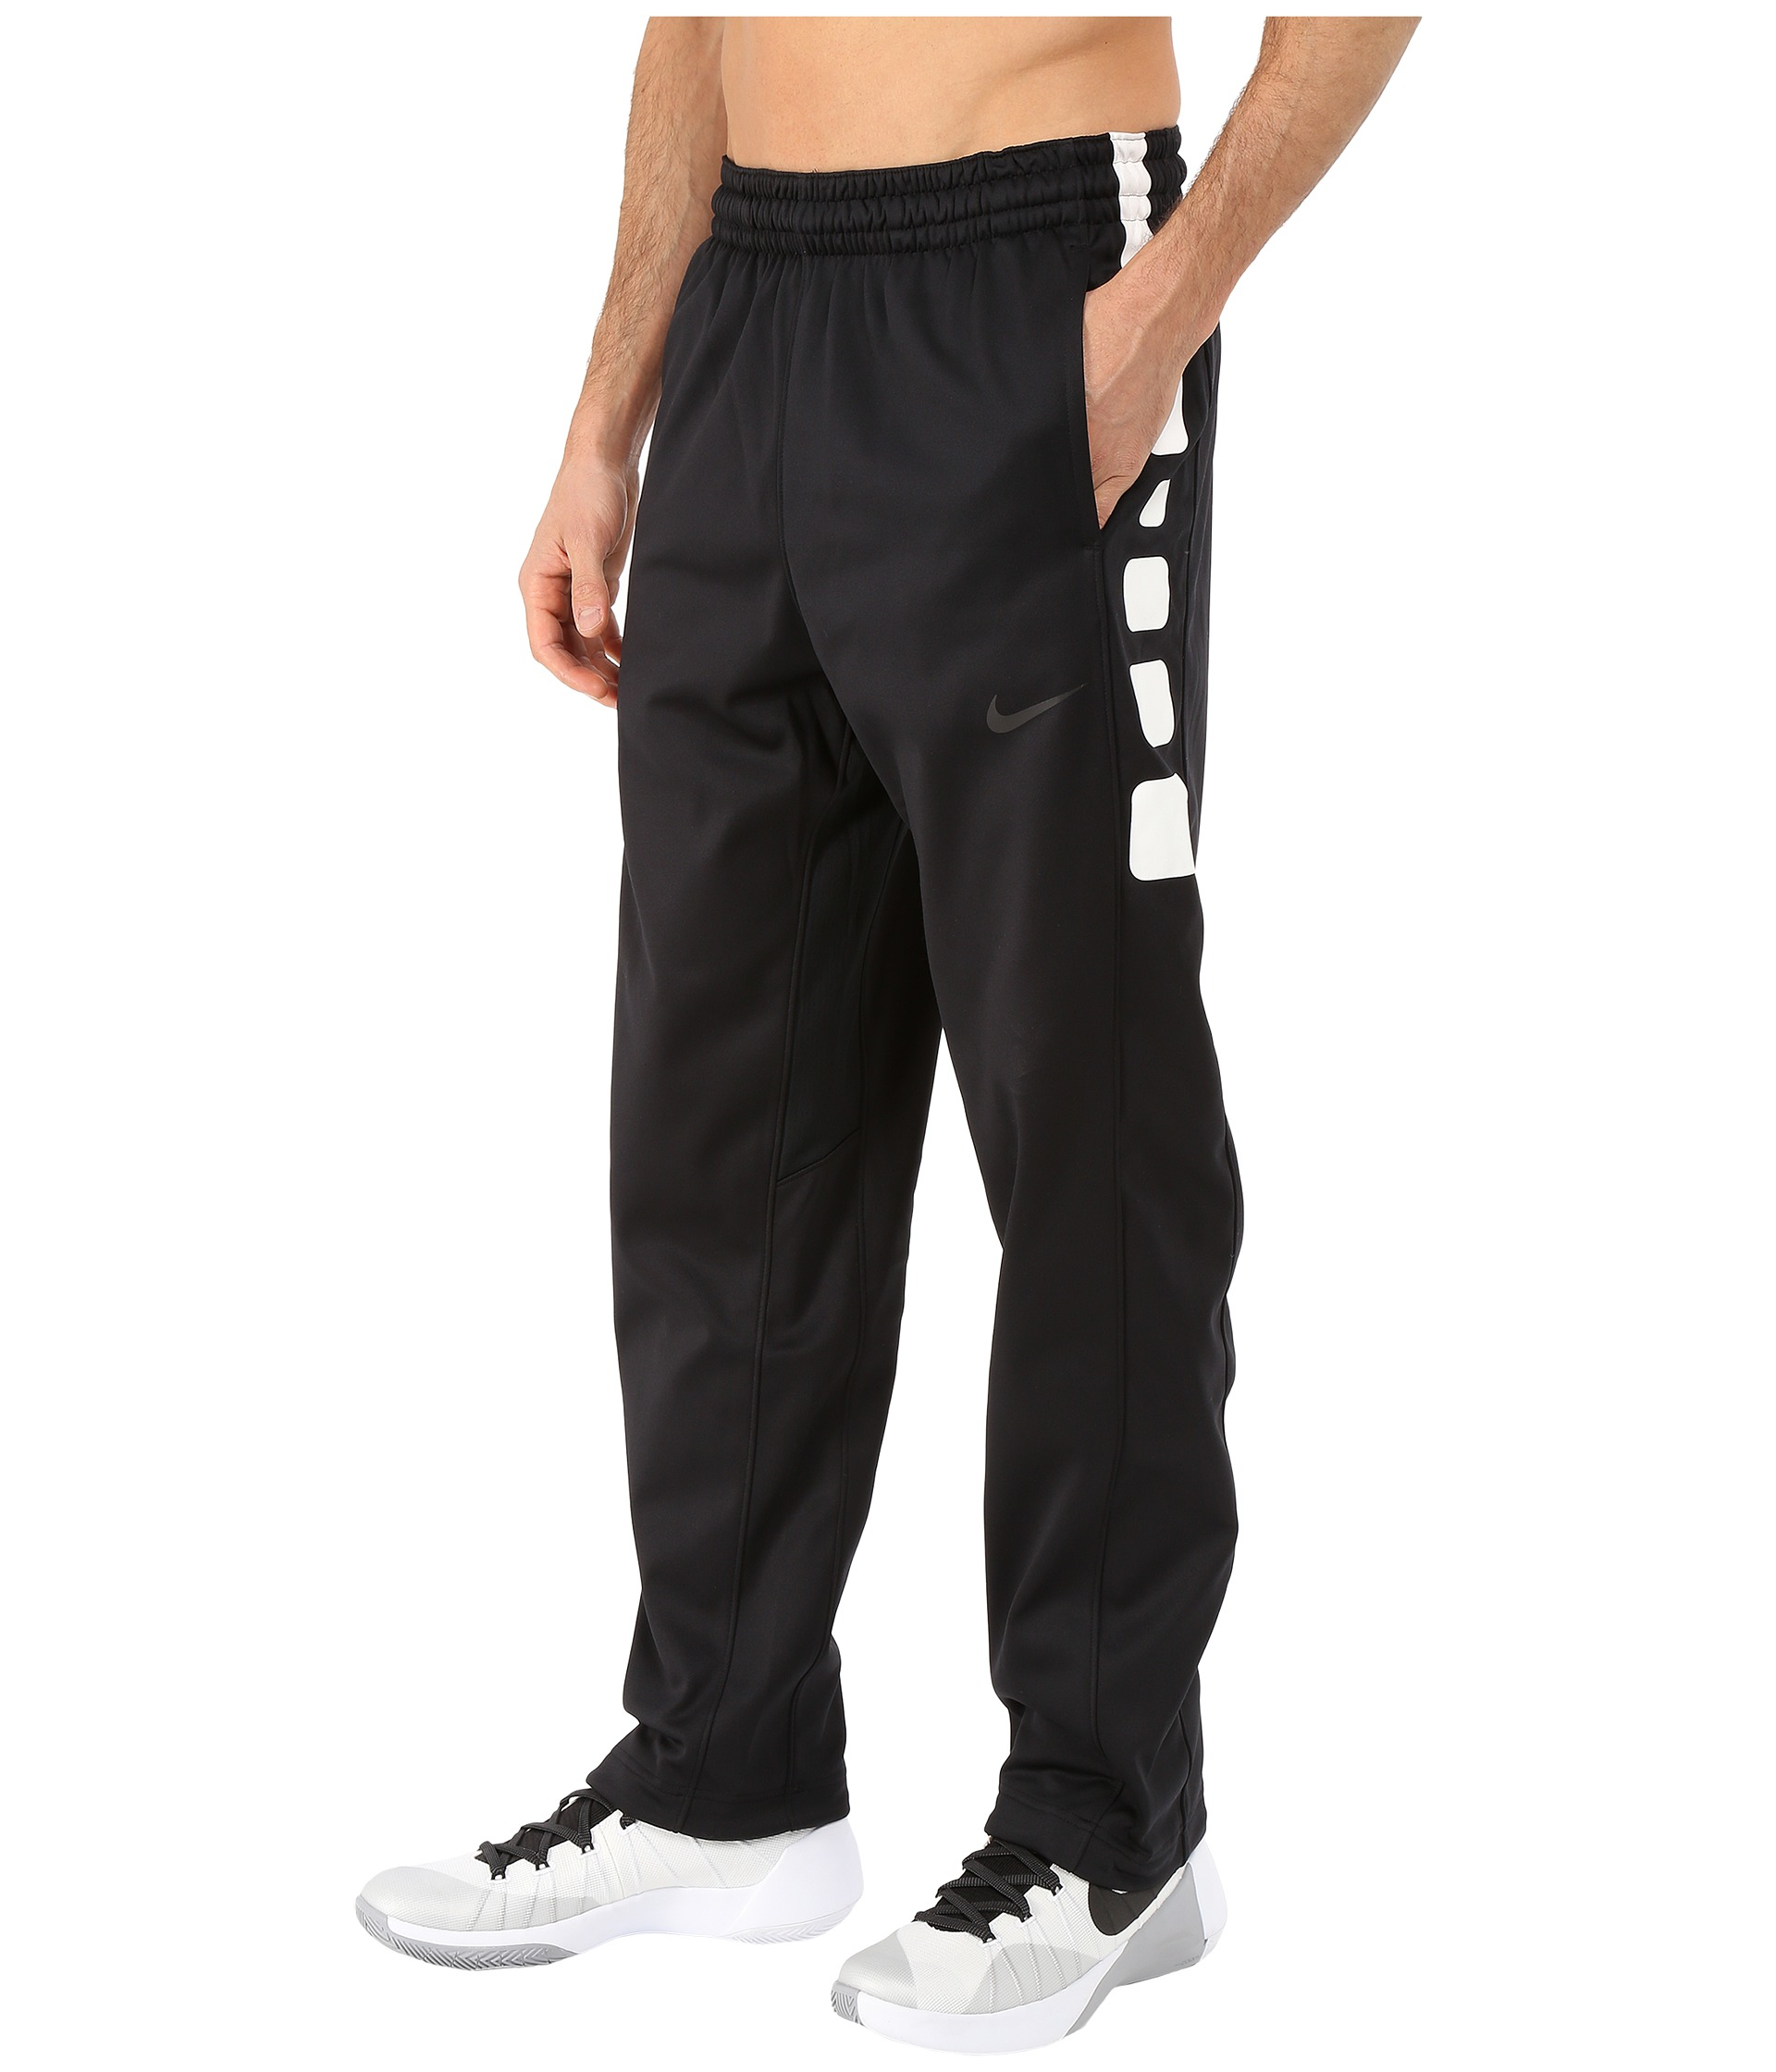 Nike Elite Stripe Pants in Black/Black/White/Black (Black) for Men - Lyst